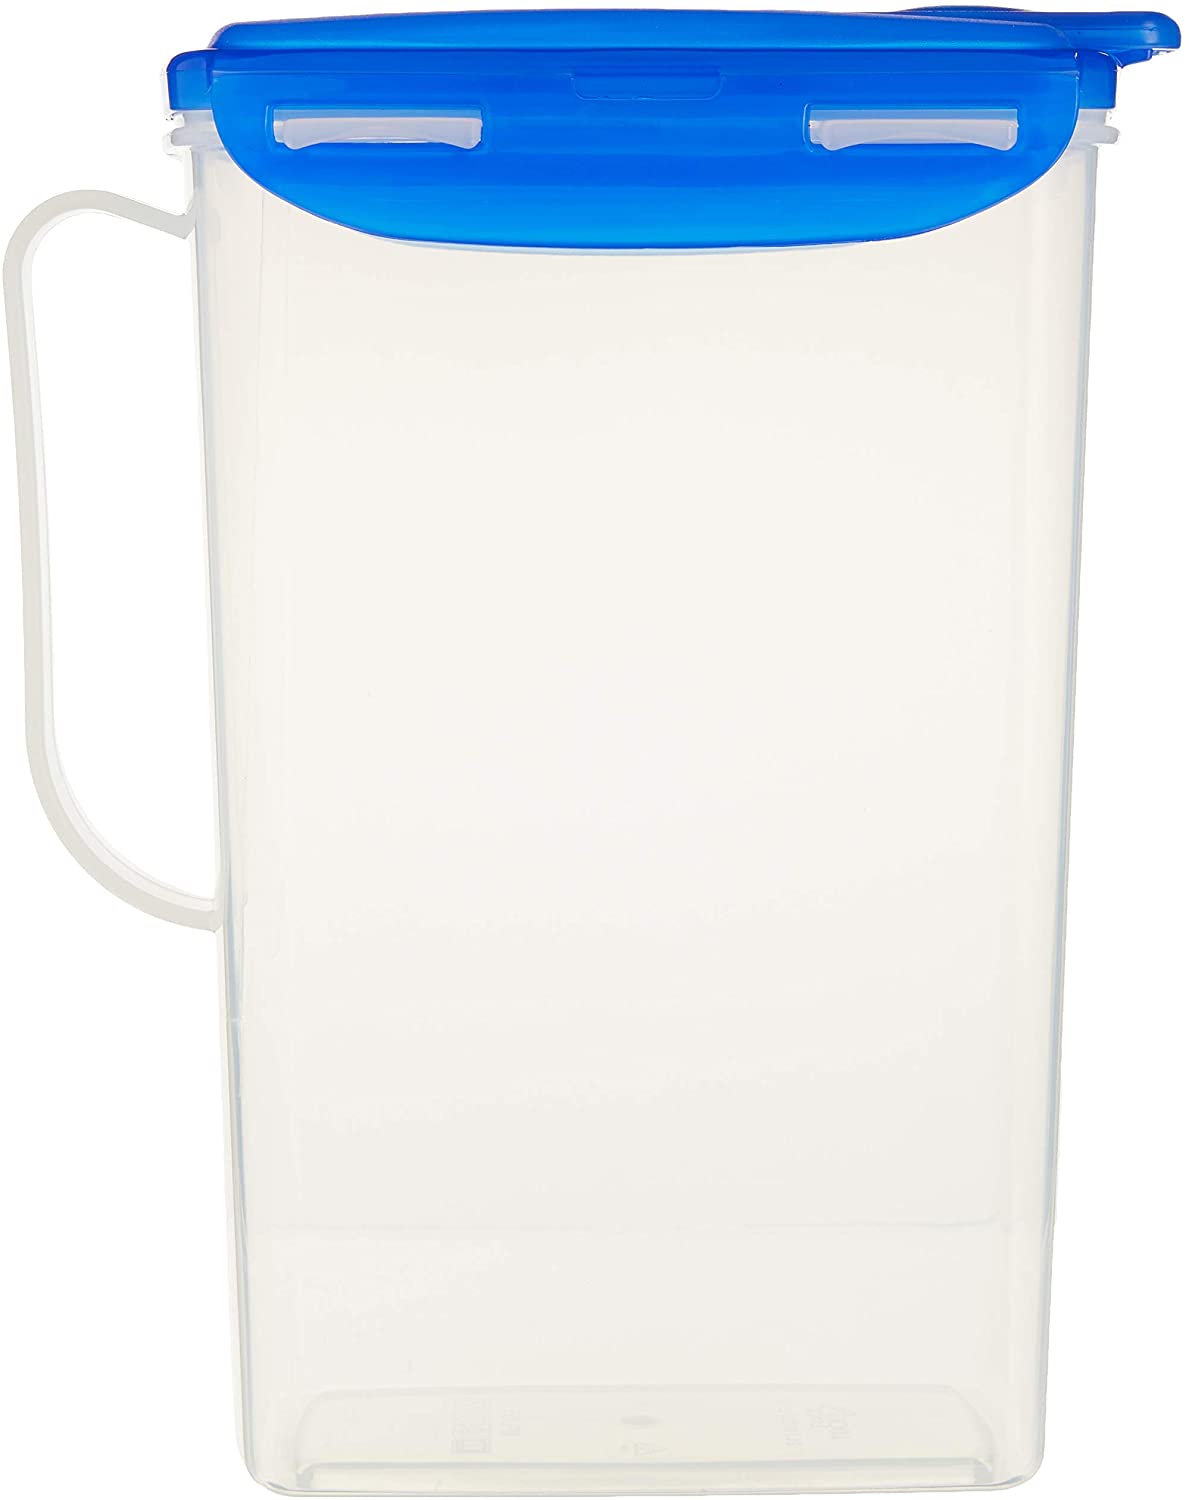 LOCK & LOCK Aqua Fridge Door Water Jug with Handle BPA Free Plastic Pitcher with Flip Top Lid Perfect for Making Teas and Juices, 2 Quarts